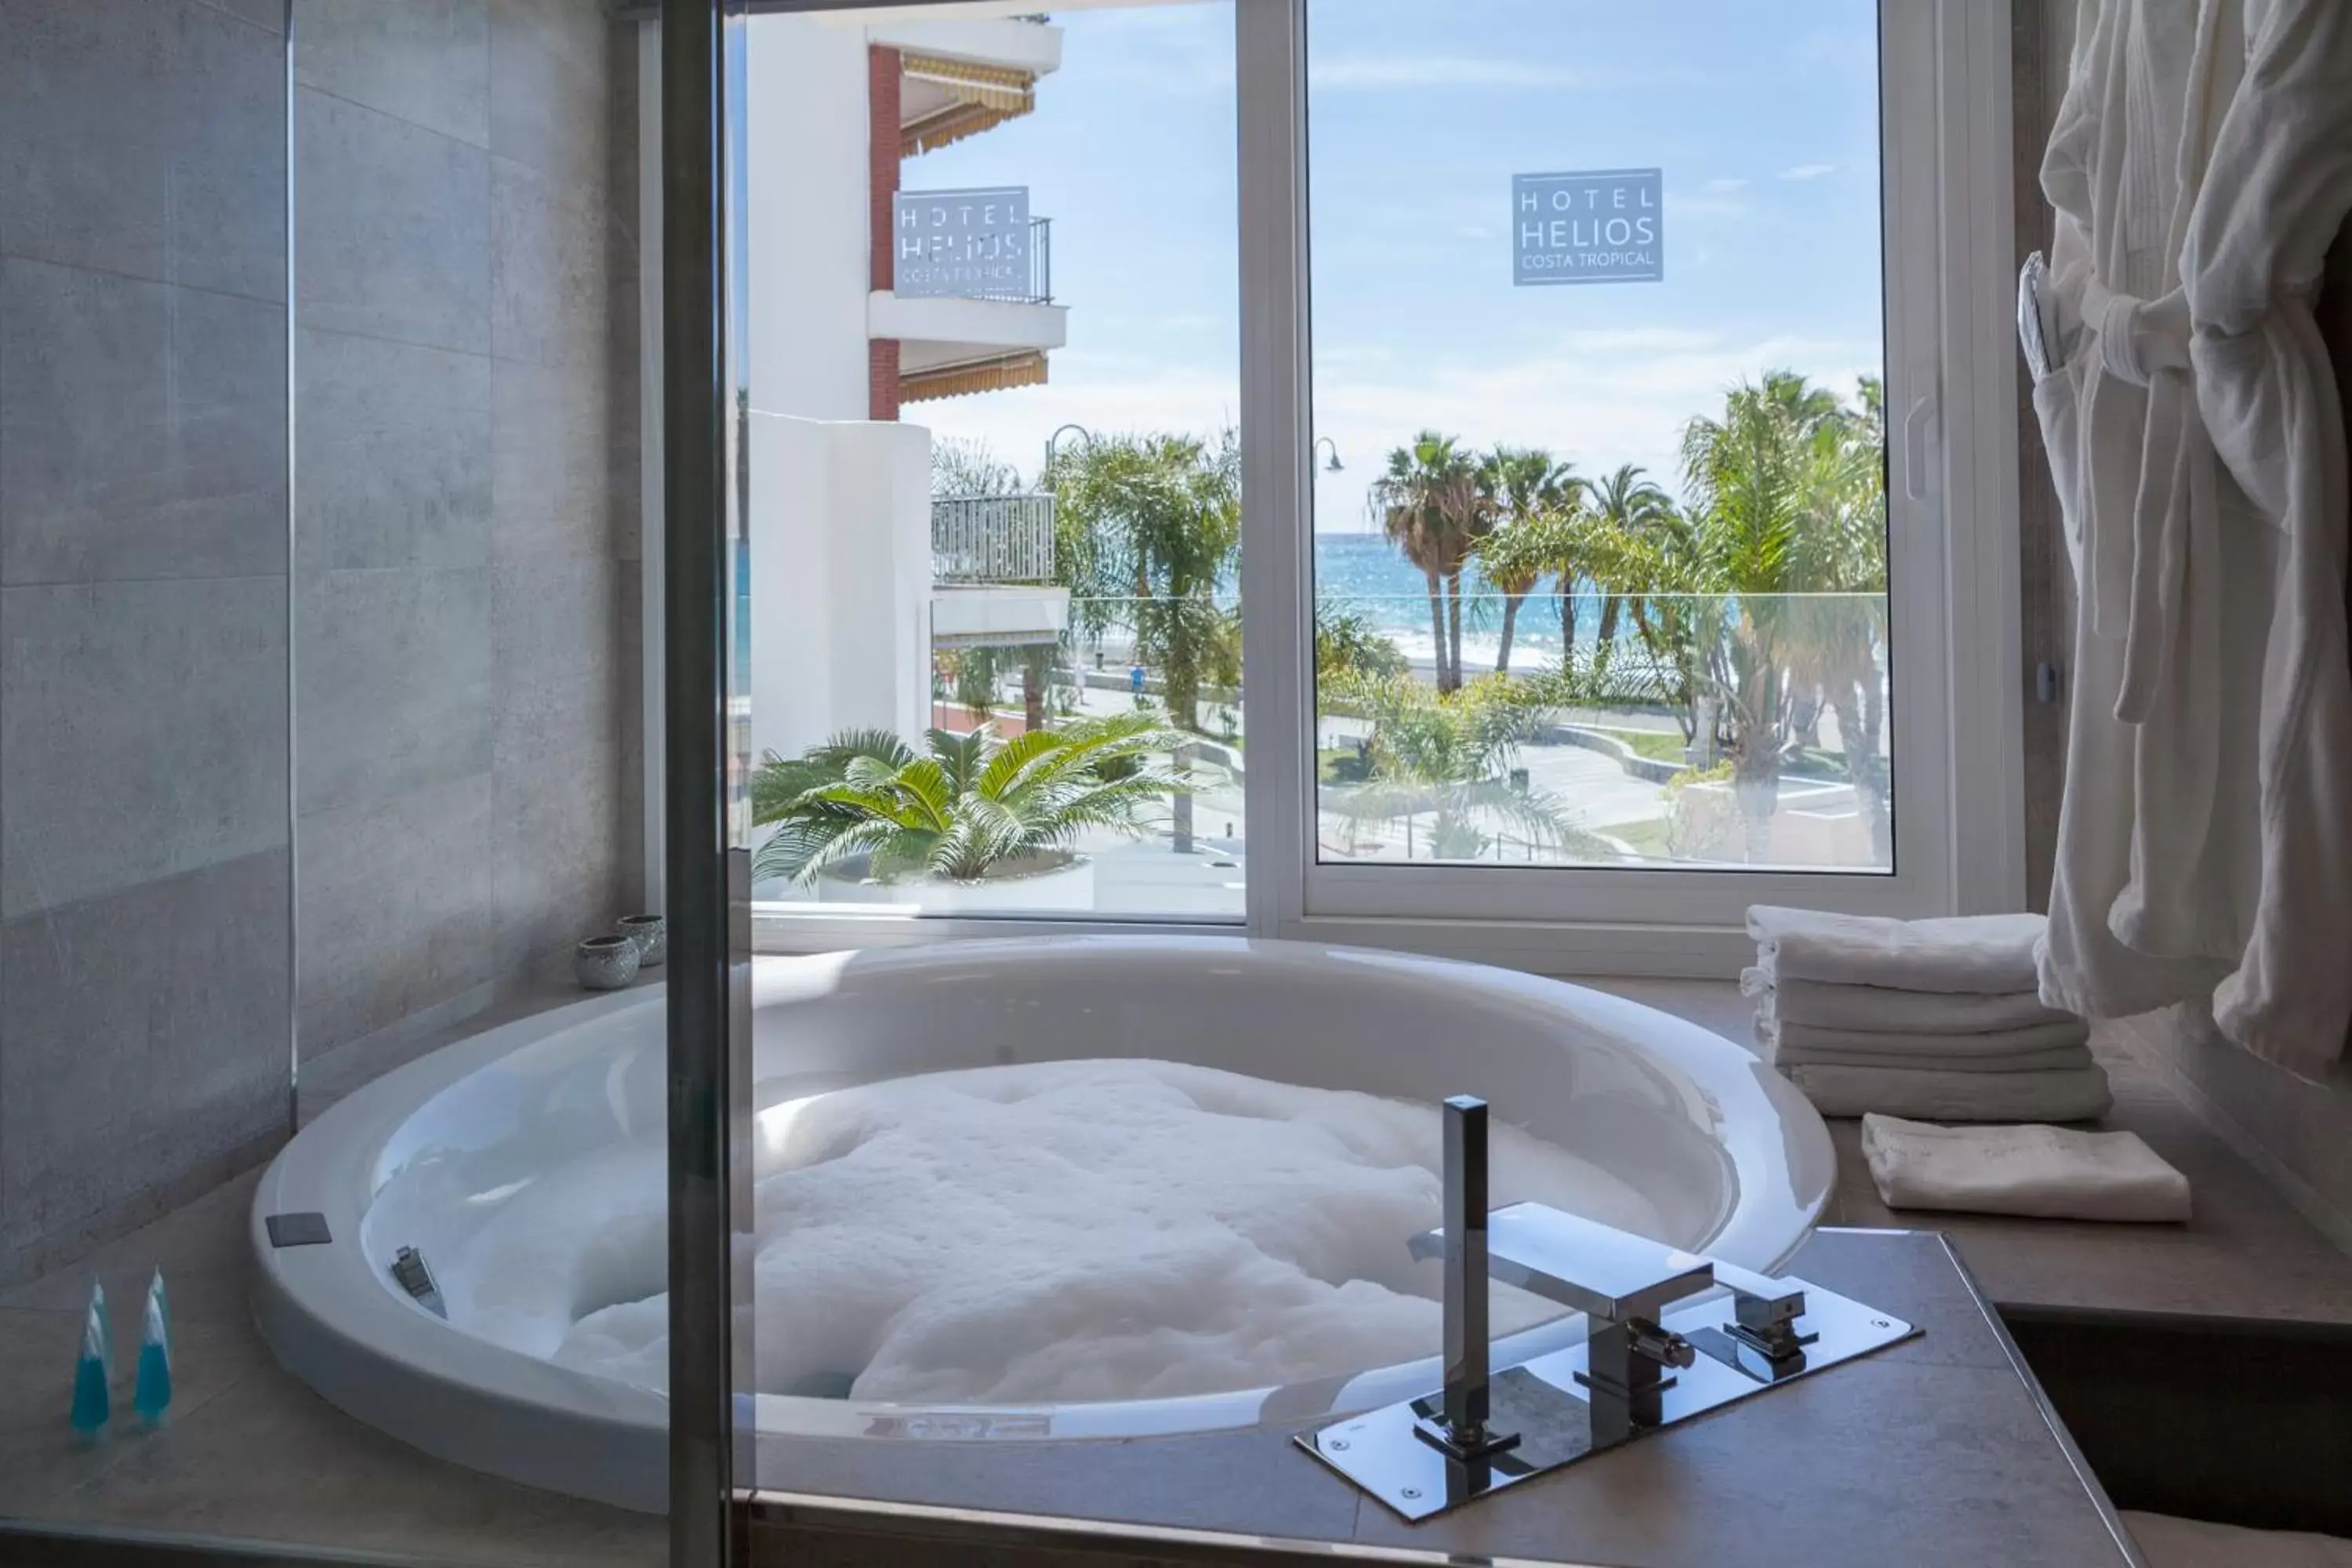 Bathroom in Hotel Helios Costa Tropical